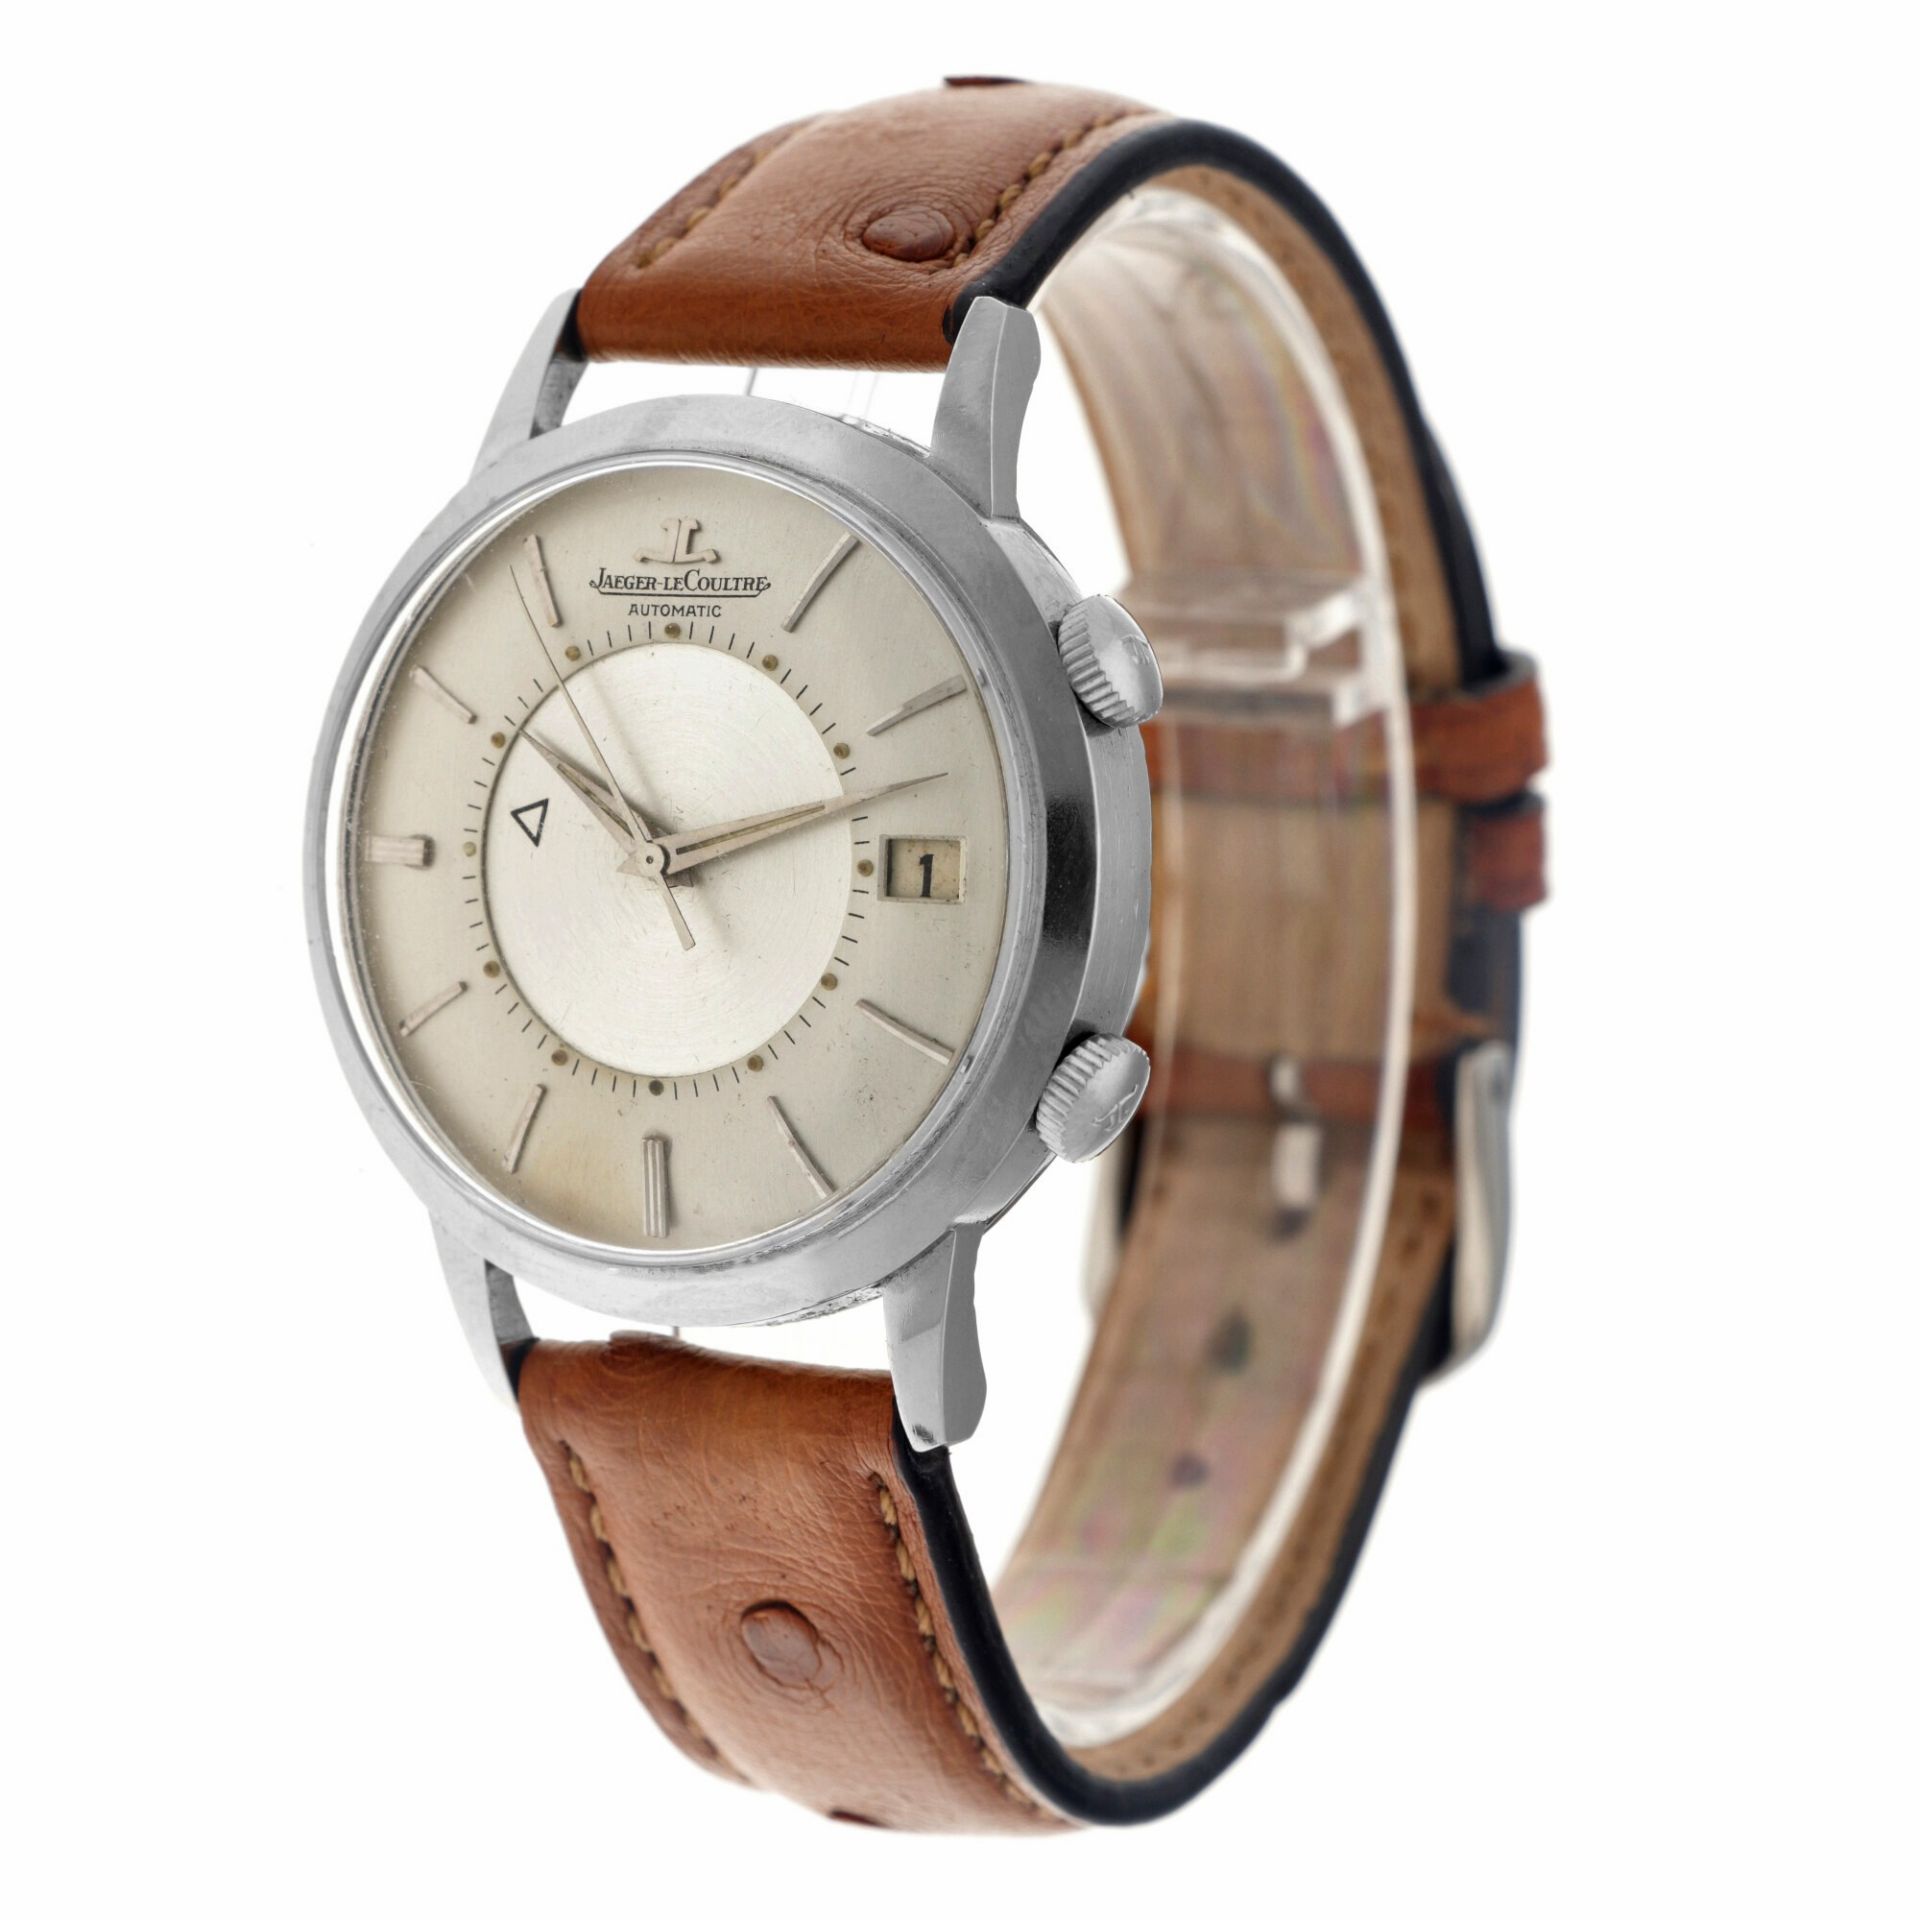 Jaeger-LeCoultre Memovox Automatic - Men's wristwatch. - Image 2 of 5